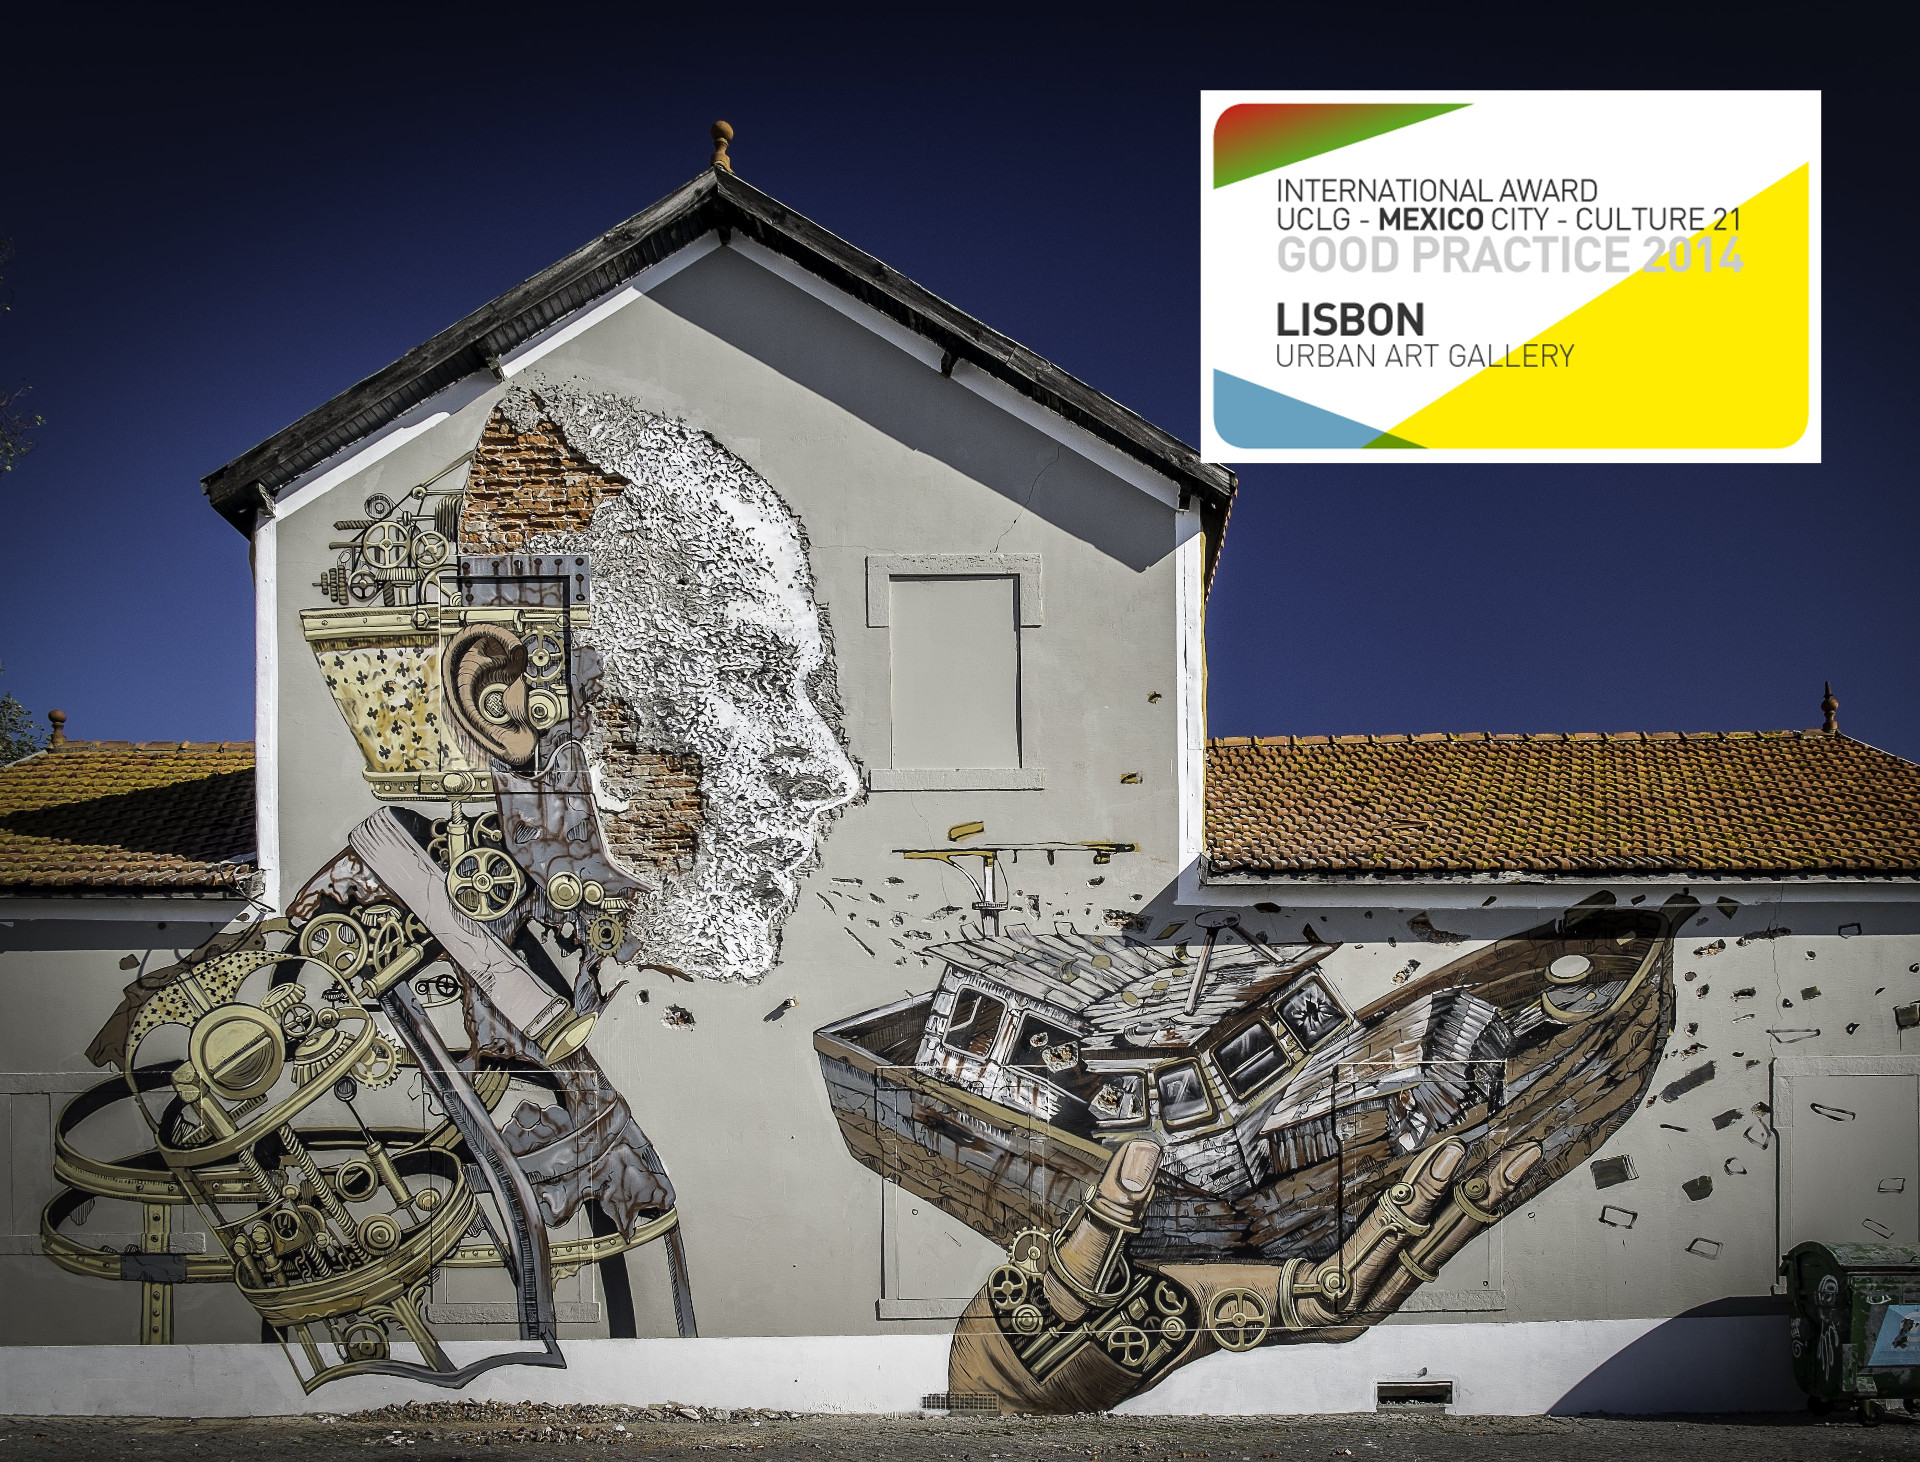 “Urban Art Gallery” of Lisbon